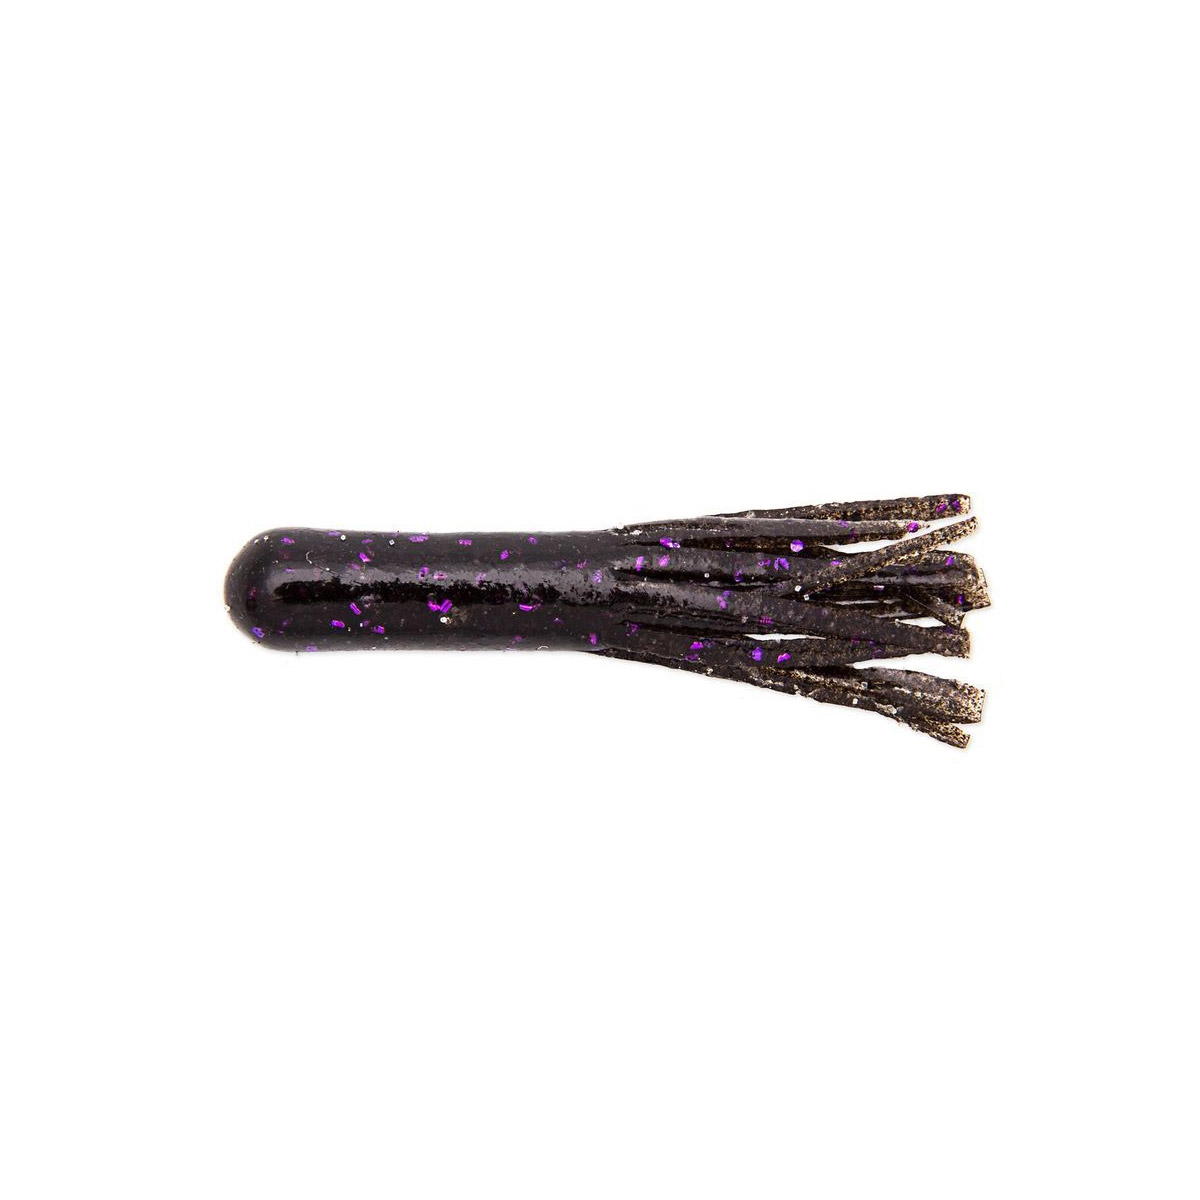 Gitzit Tounament Series Tubes 2,5 Inch -  Leech Purple Flake